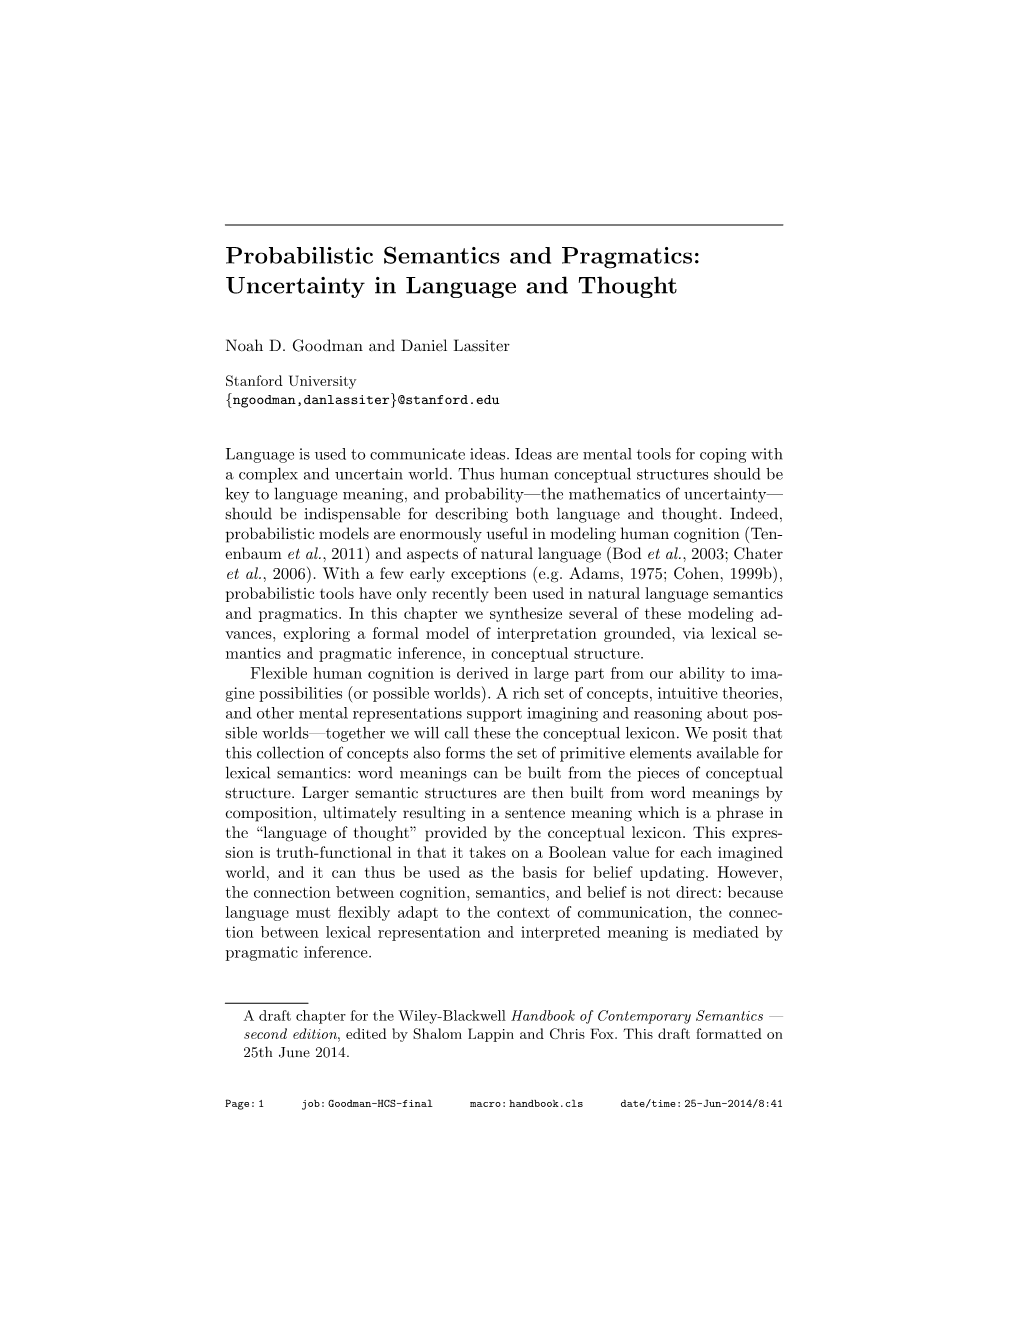 Probabilistic Semantics and Pragmatics: Uncertainty in Language and Thought